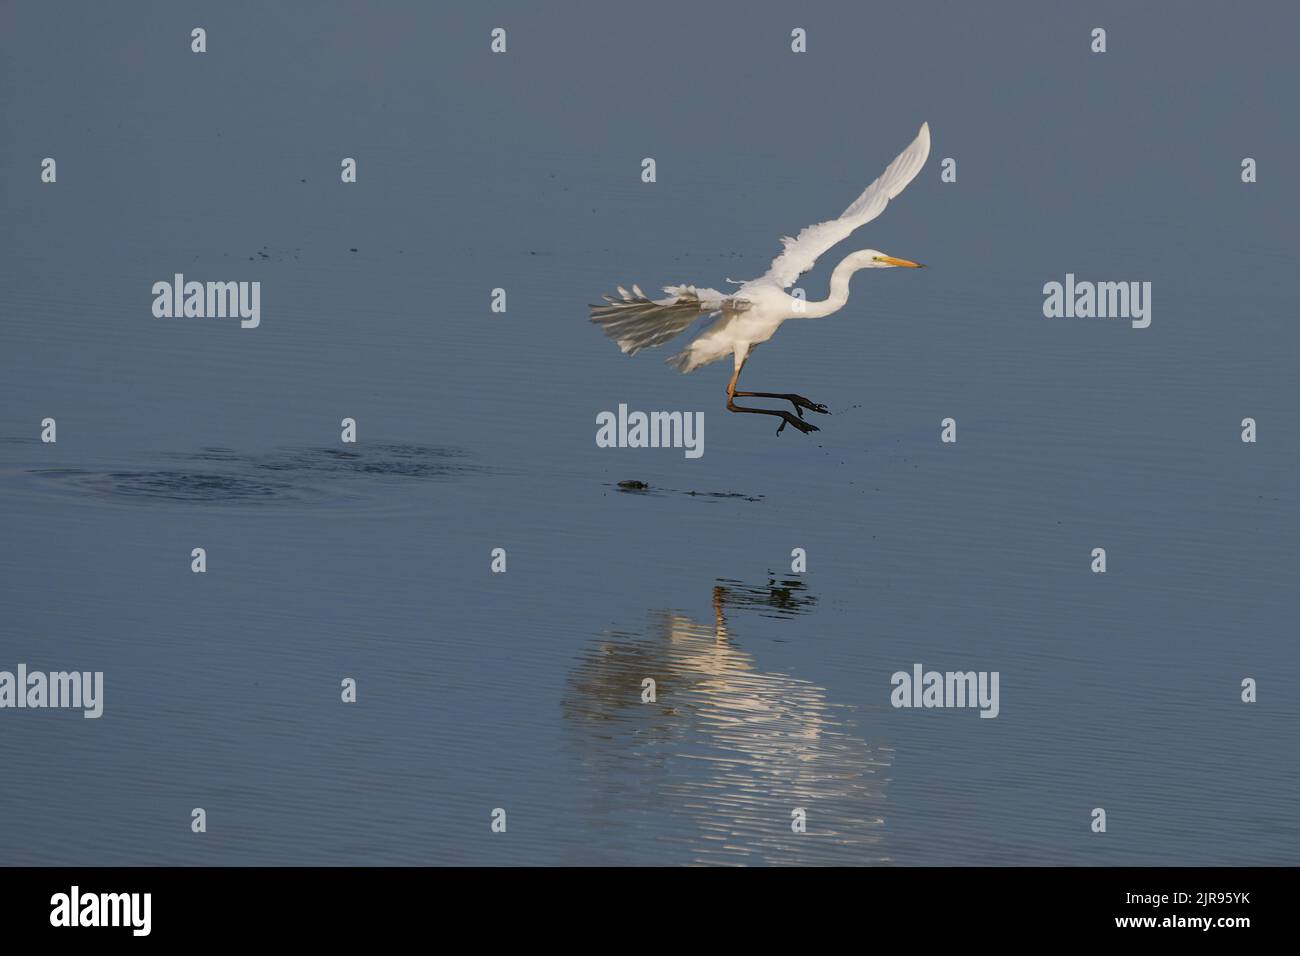 Silberreiher, great egret, great white heron, Ardea alba, Elbe bei Bleckede, Deutschland, Germany Stock Photo